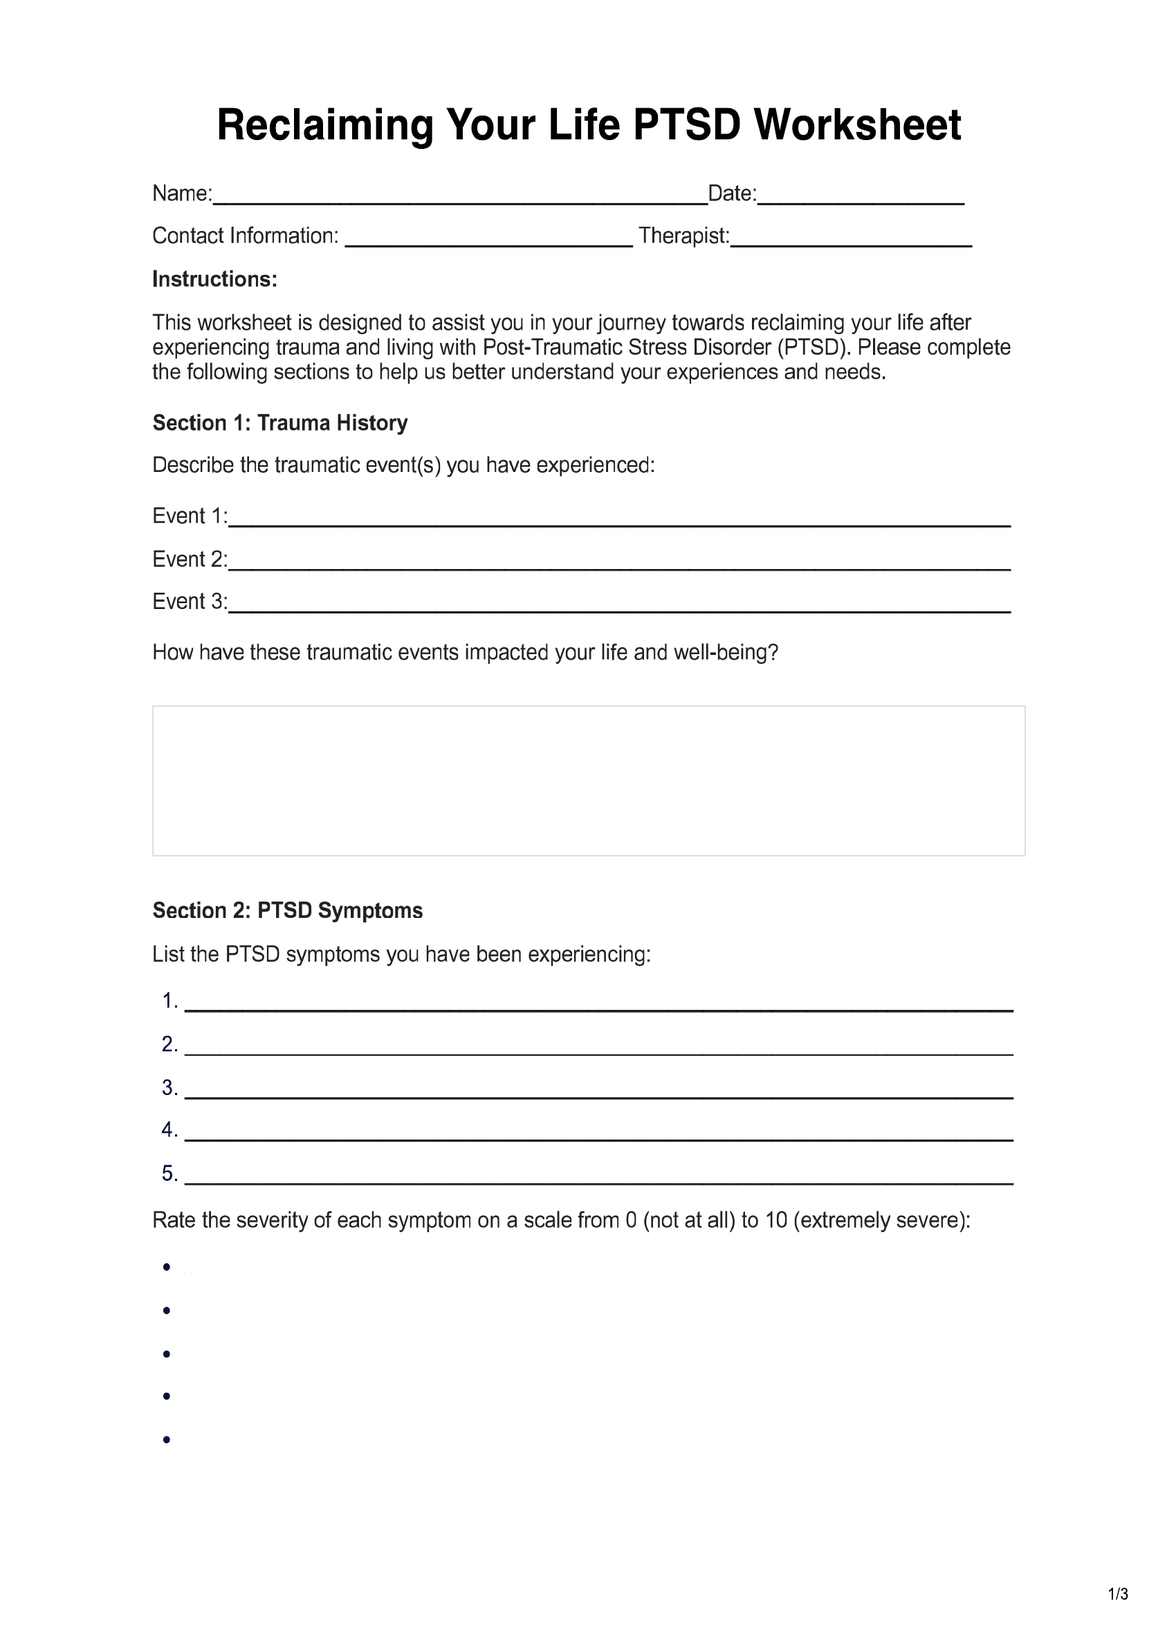 Reclaiming Your Life PTSD Worksheet PDF Example